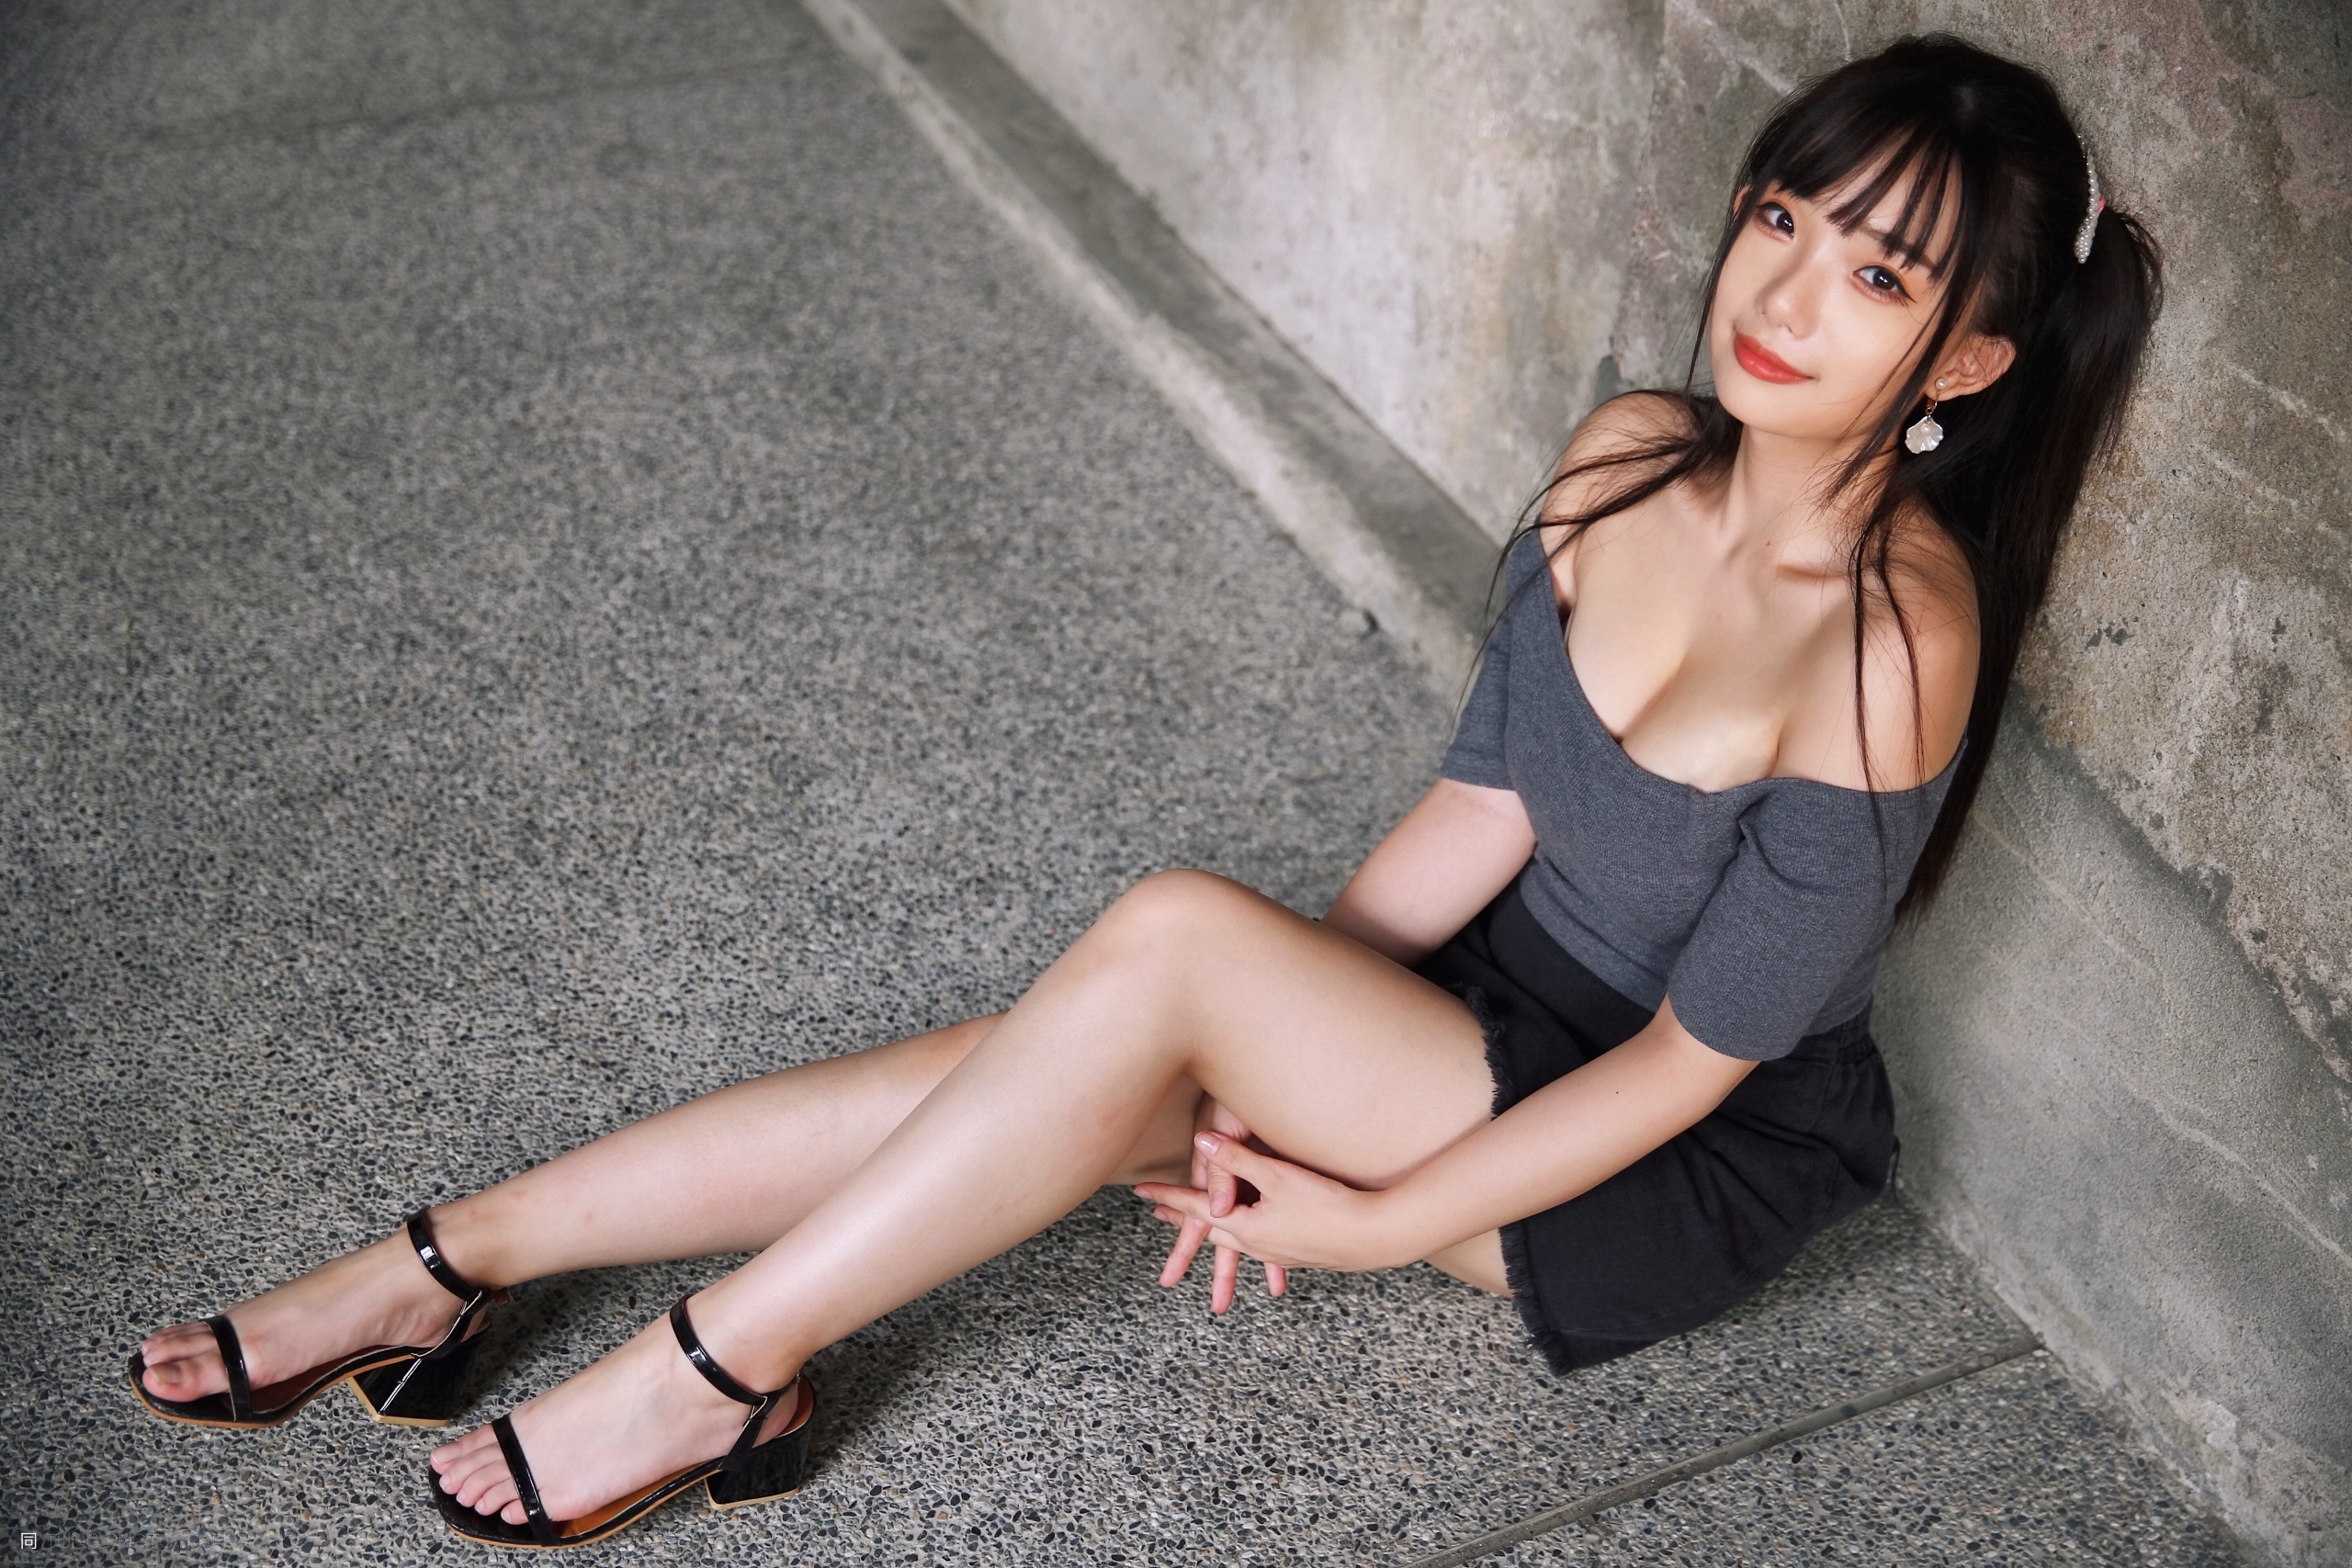 Ning Shioulin Women Model Asian Brunette Bare Shoulders Crop Top Sitting Looking At Viewer Portrait  2560x1707